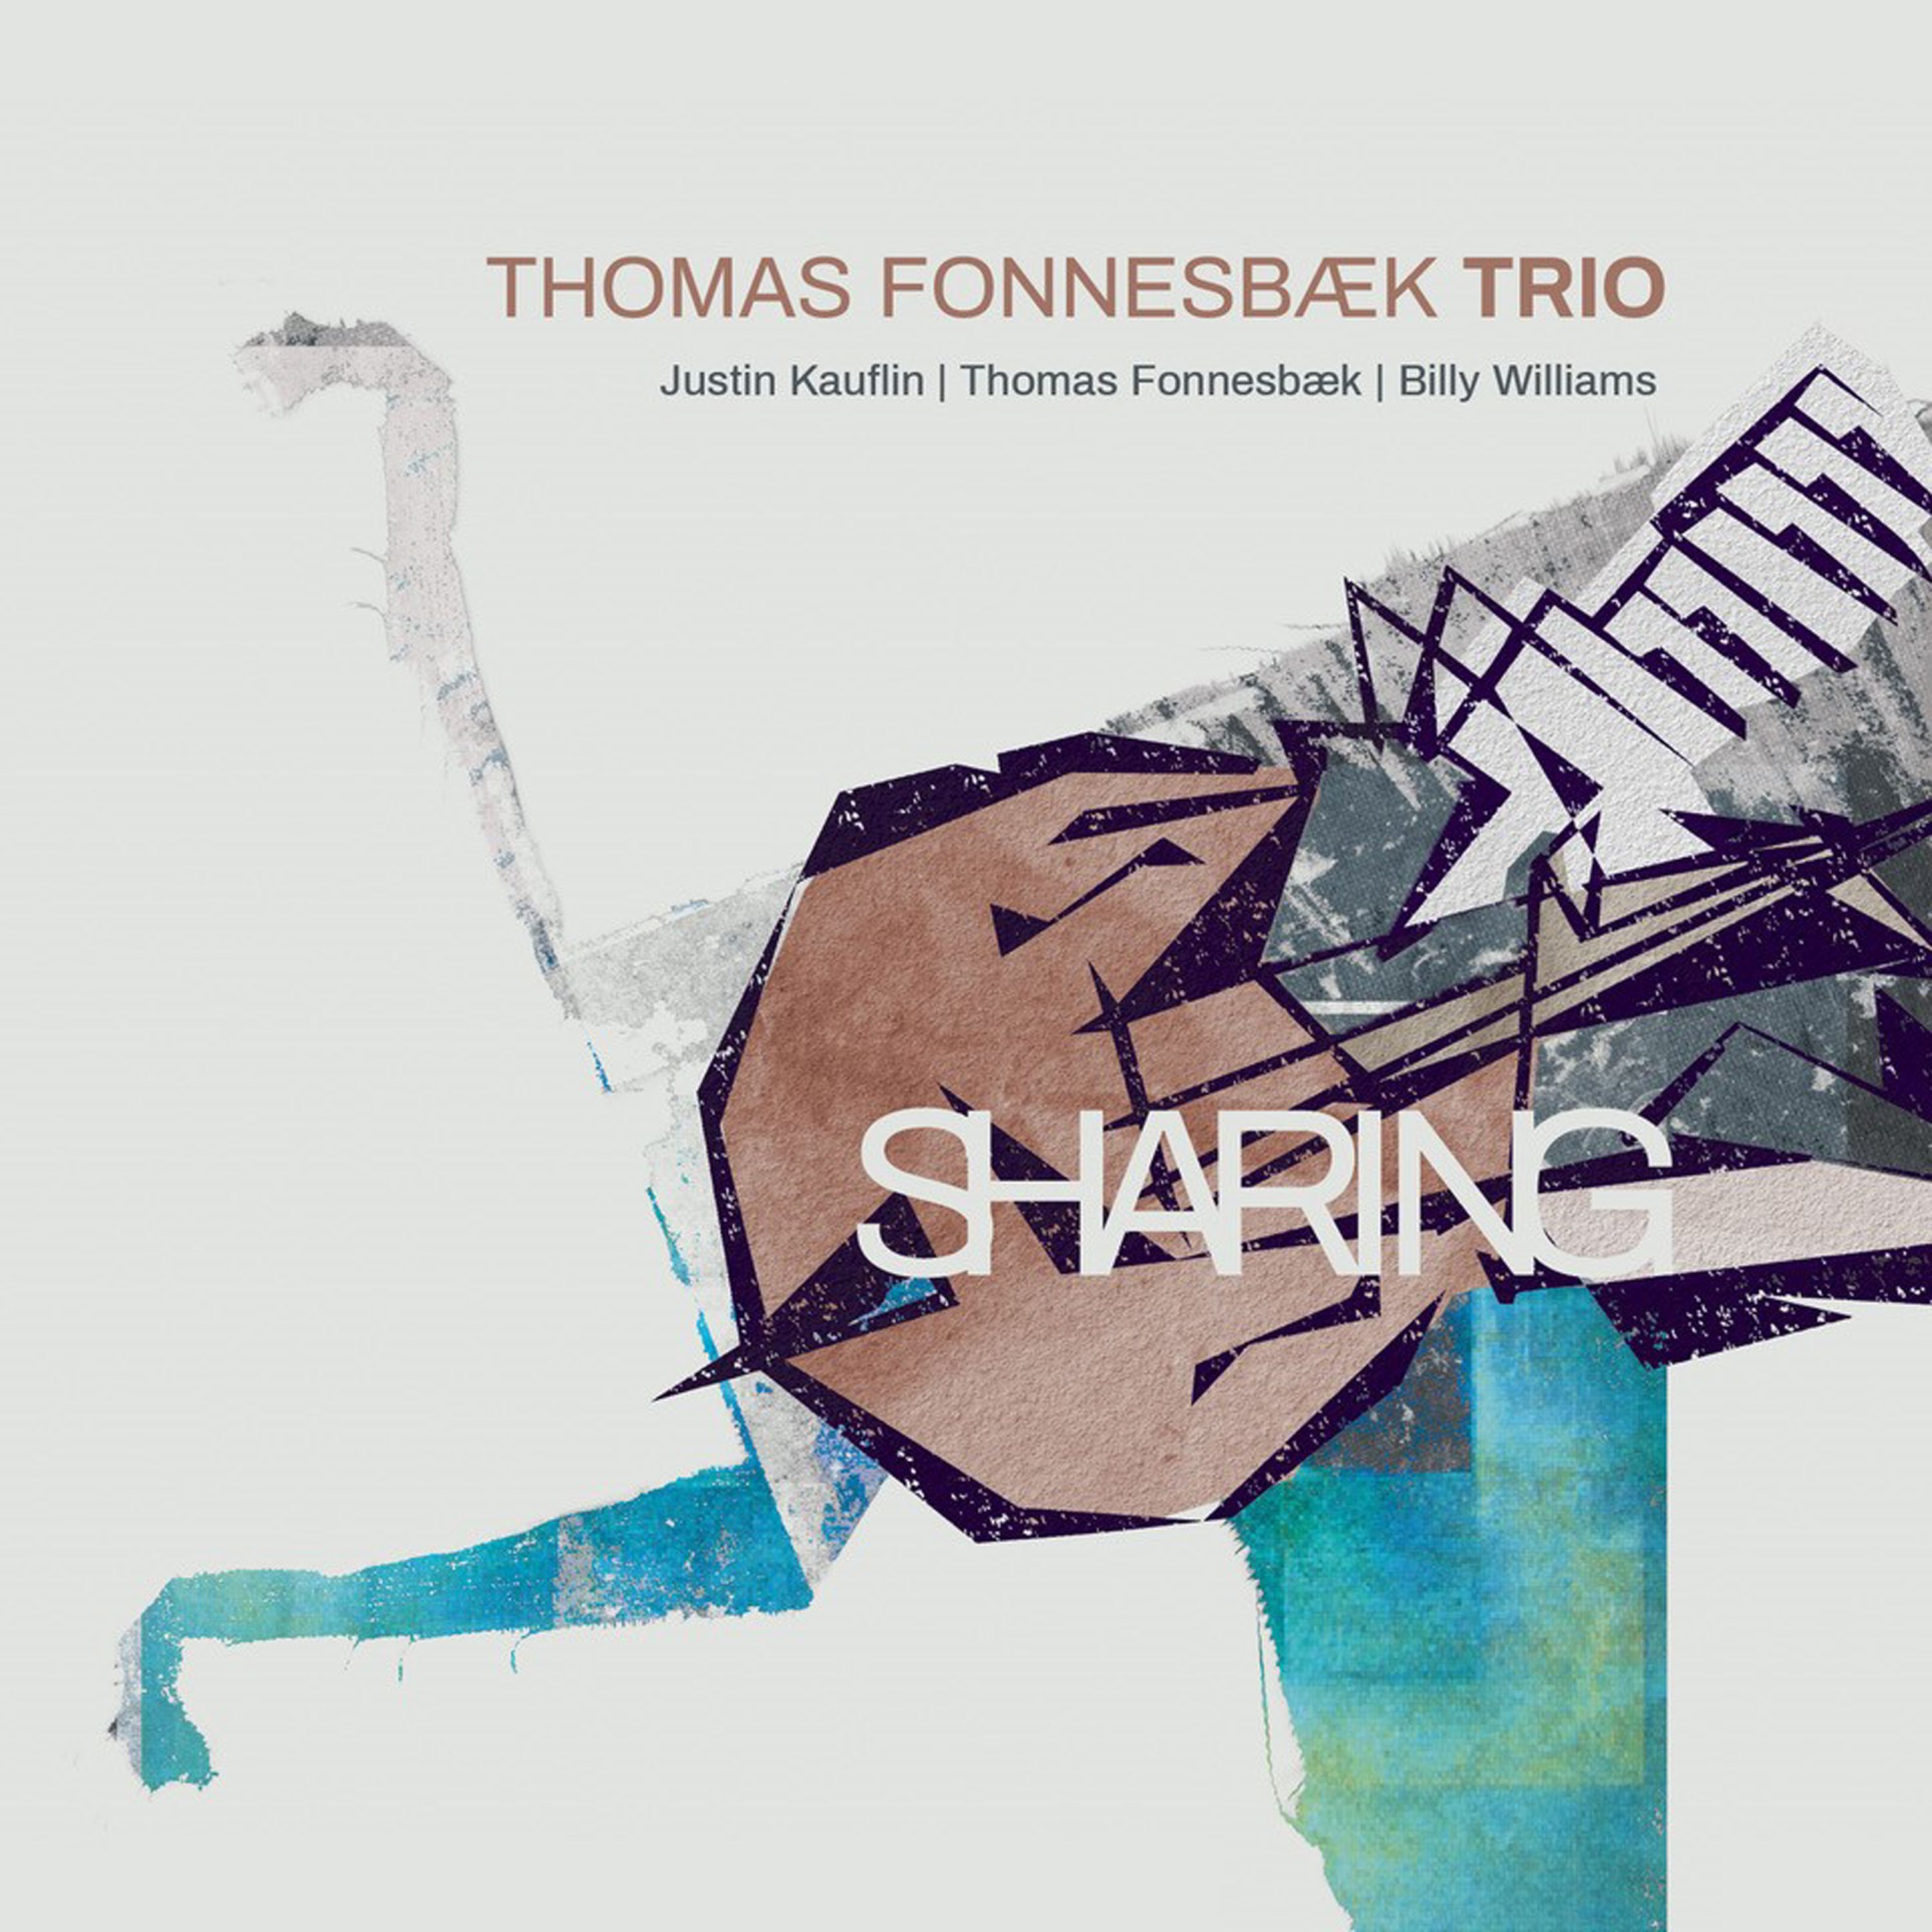 Thomas Fonnesbaek Trio Sharing 音楽雑記帳 クラシック ジャズ 吹奏楽 楽天ブログ